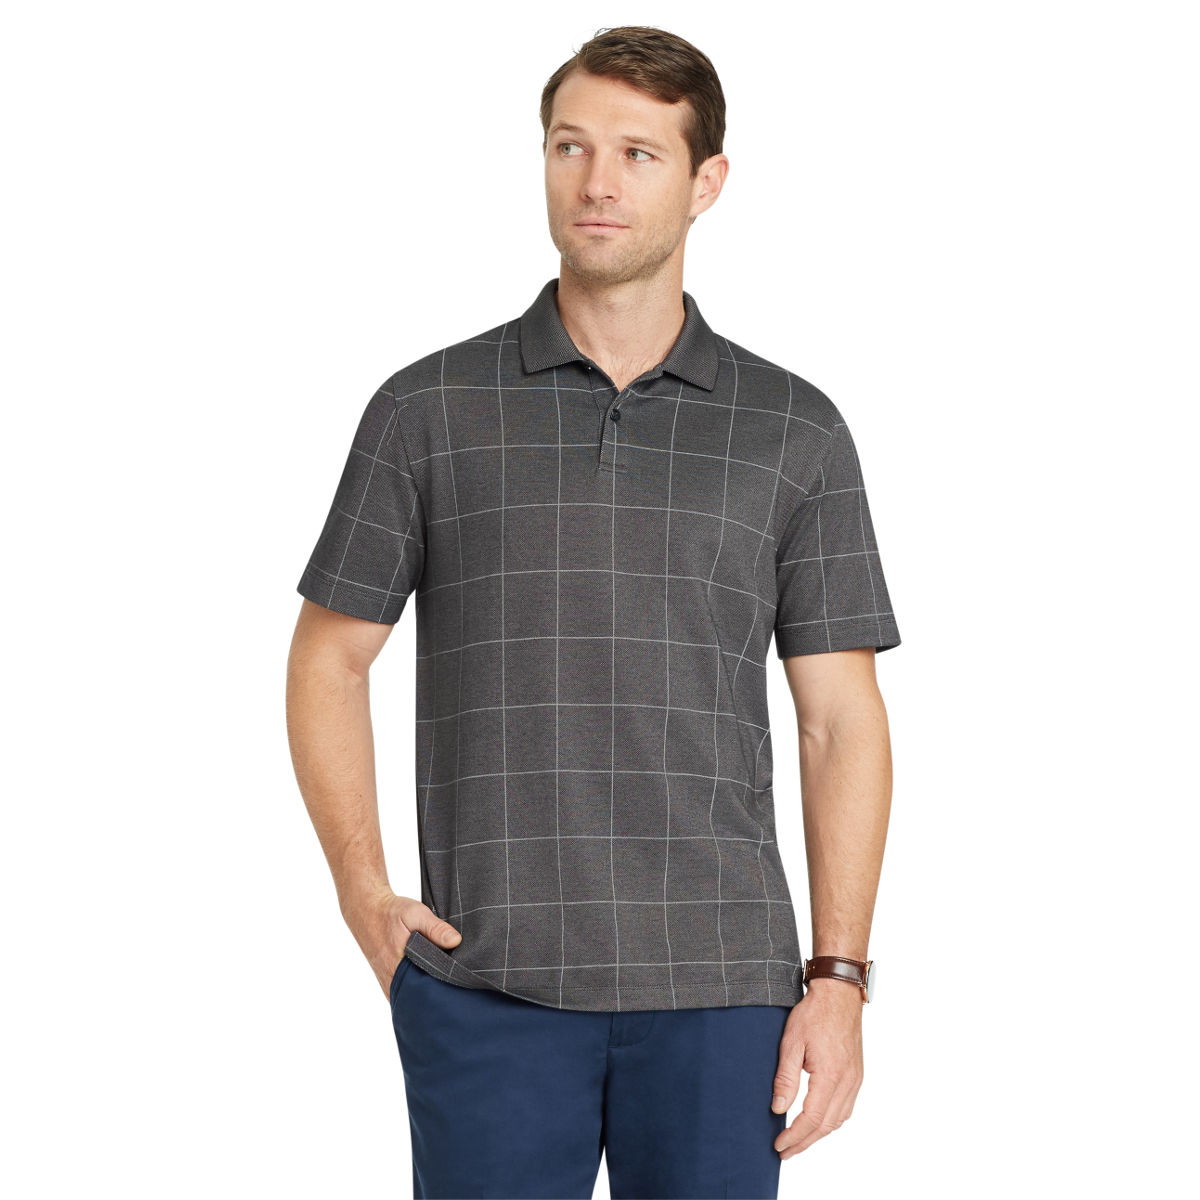 Van Heusen Men's Flex Print Windowpane Short-Sleeve Polo Shirt - Black, L